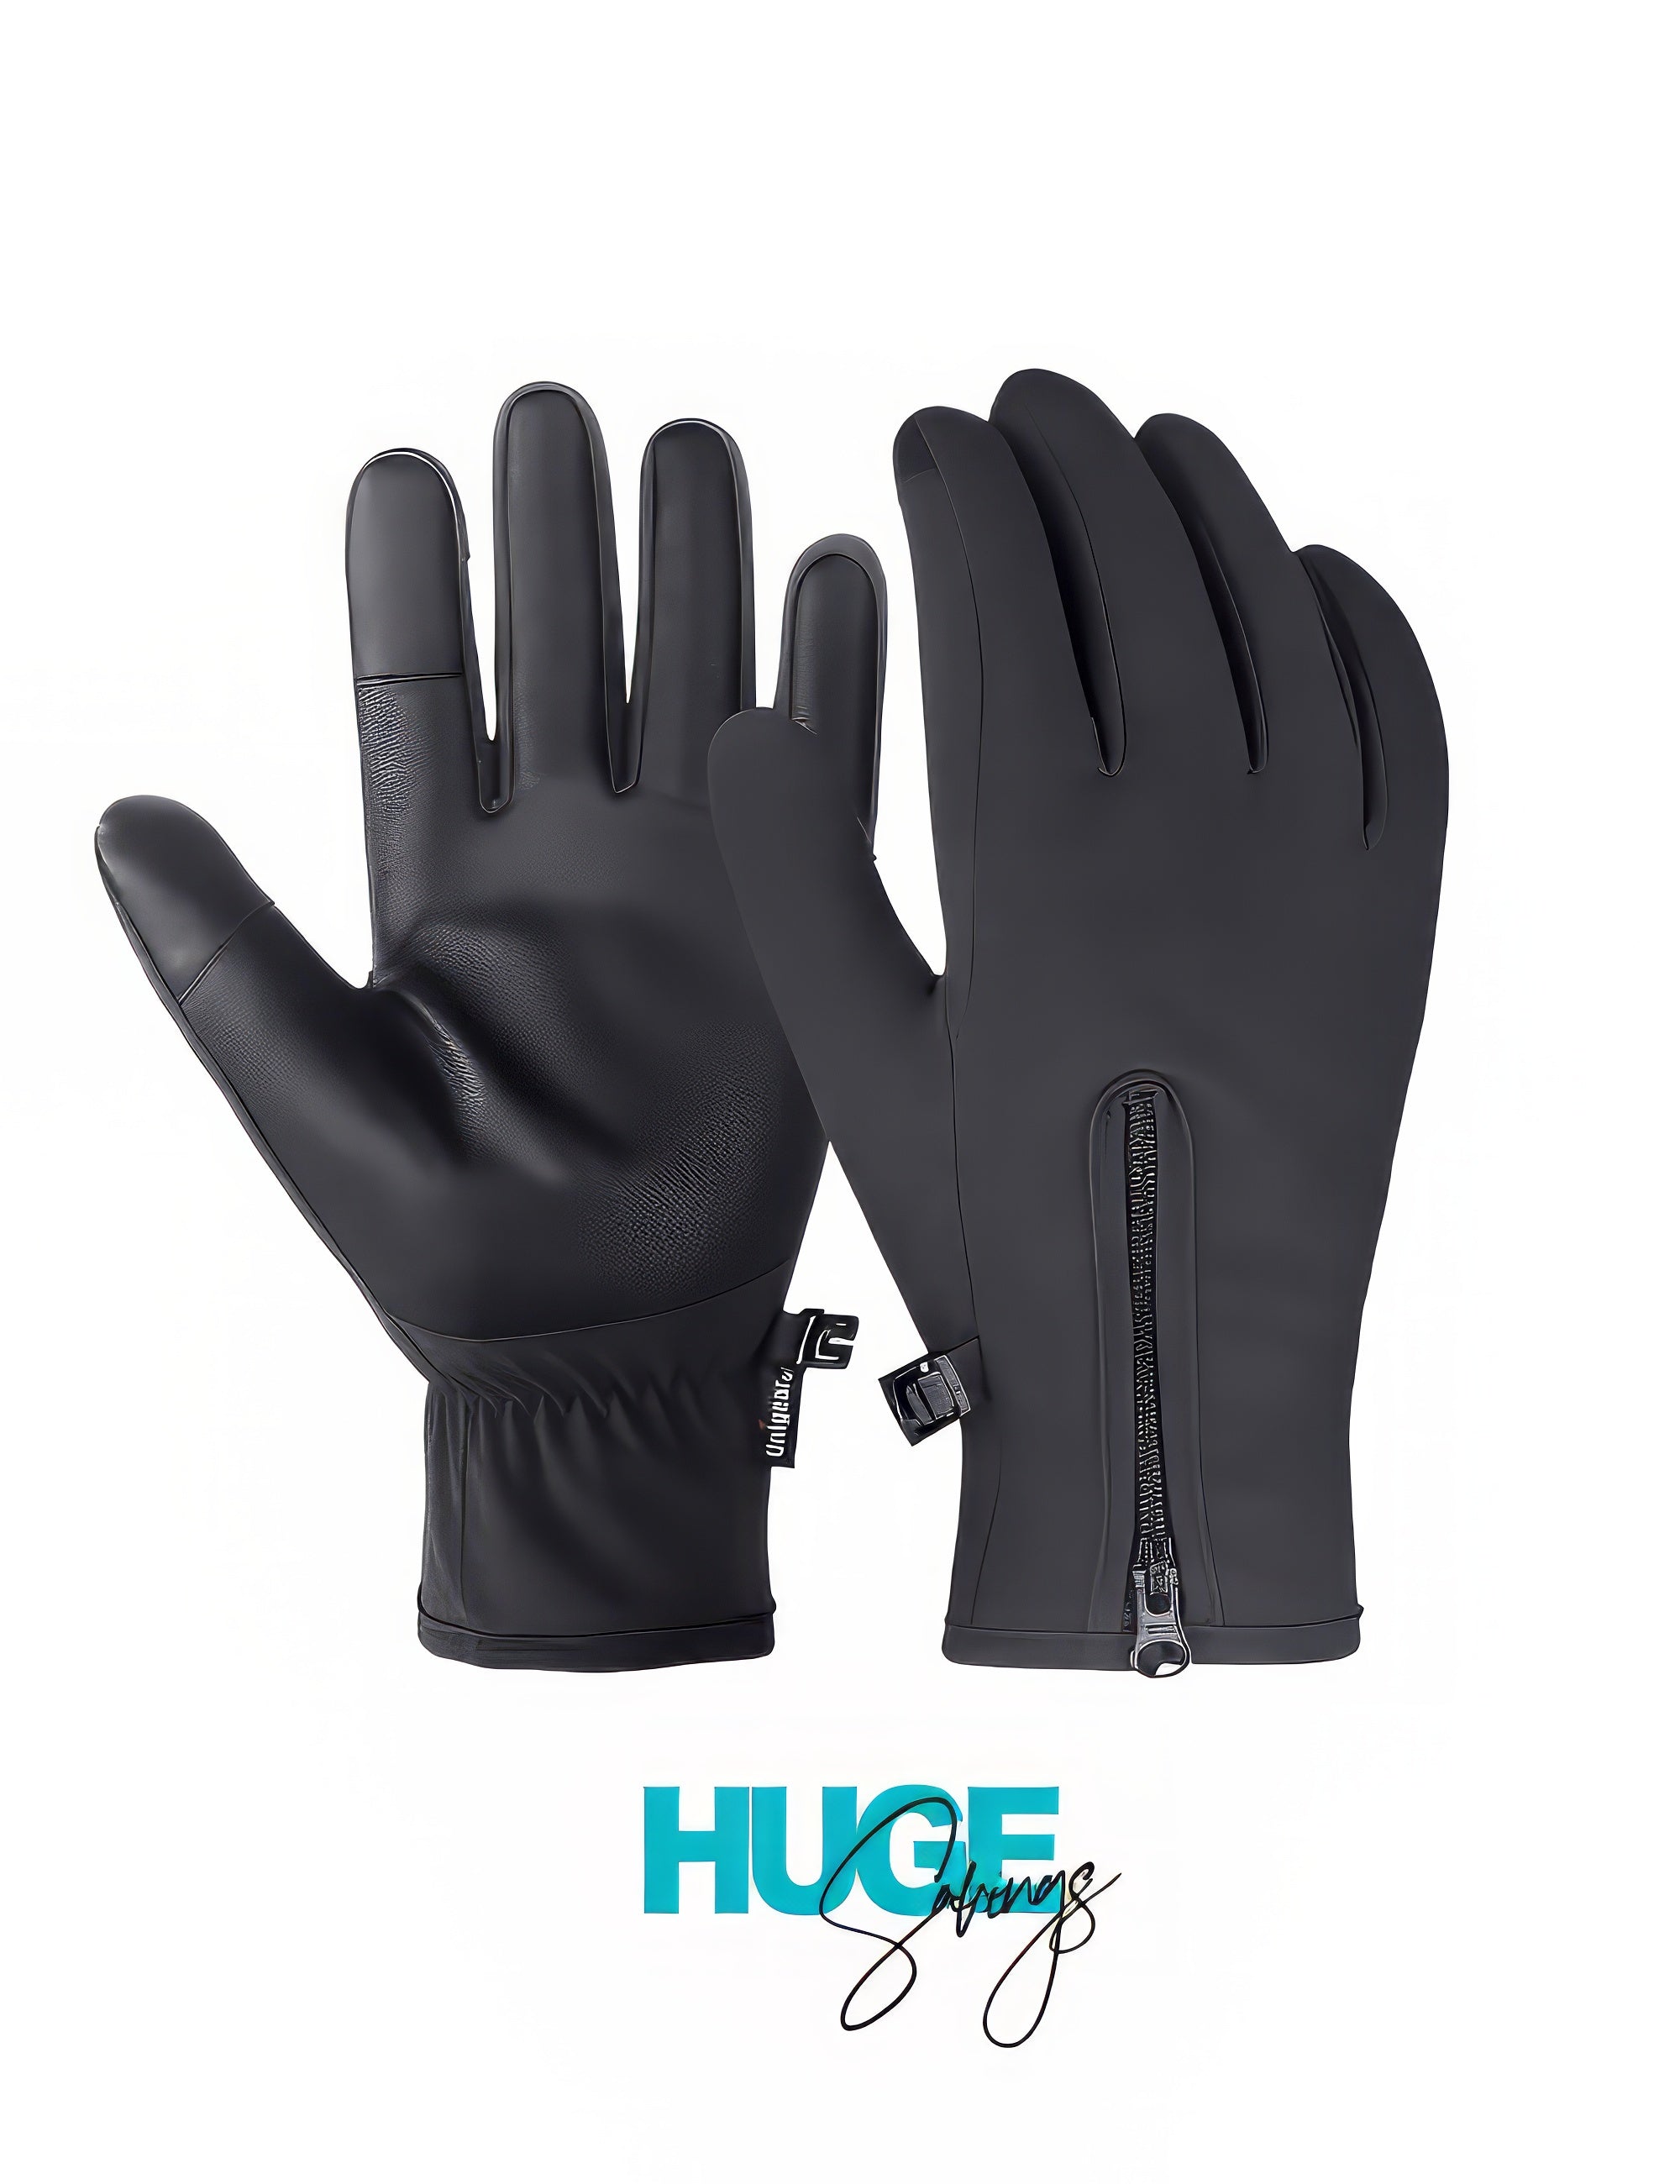 Unigear Winter Gloves, Outdoor Touch Screen Gloves.